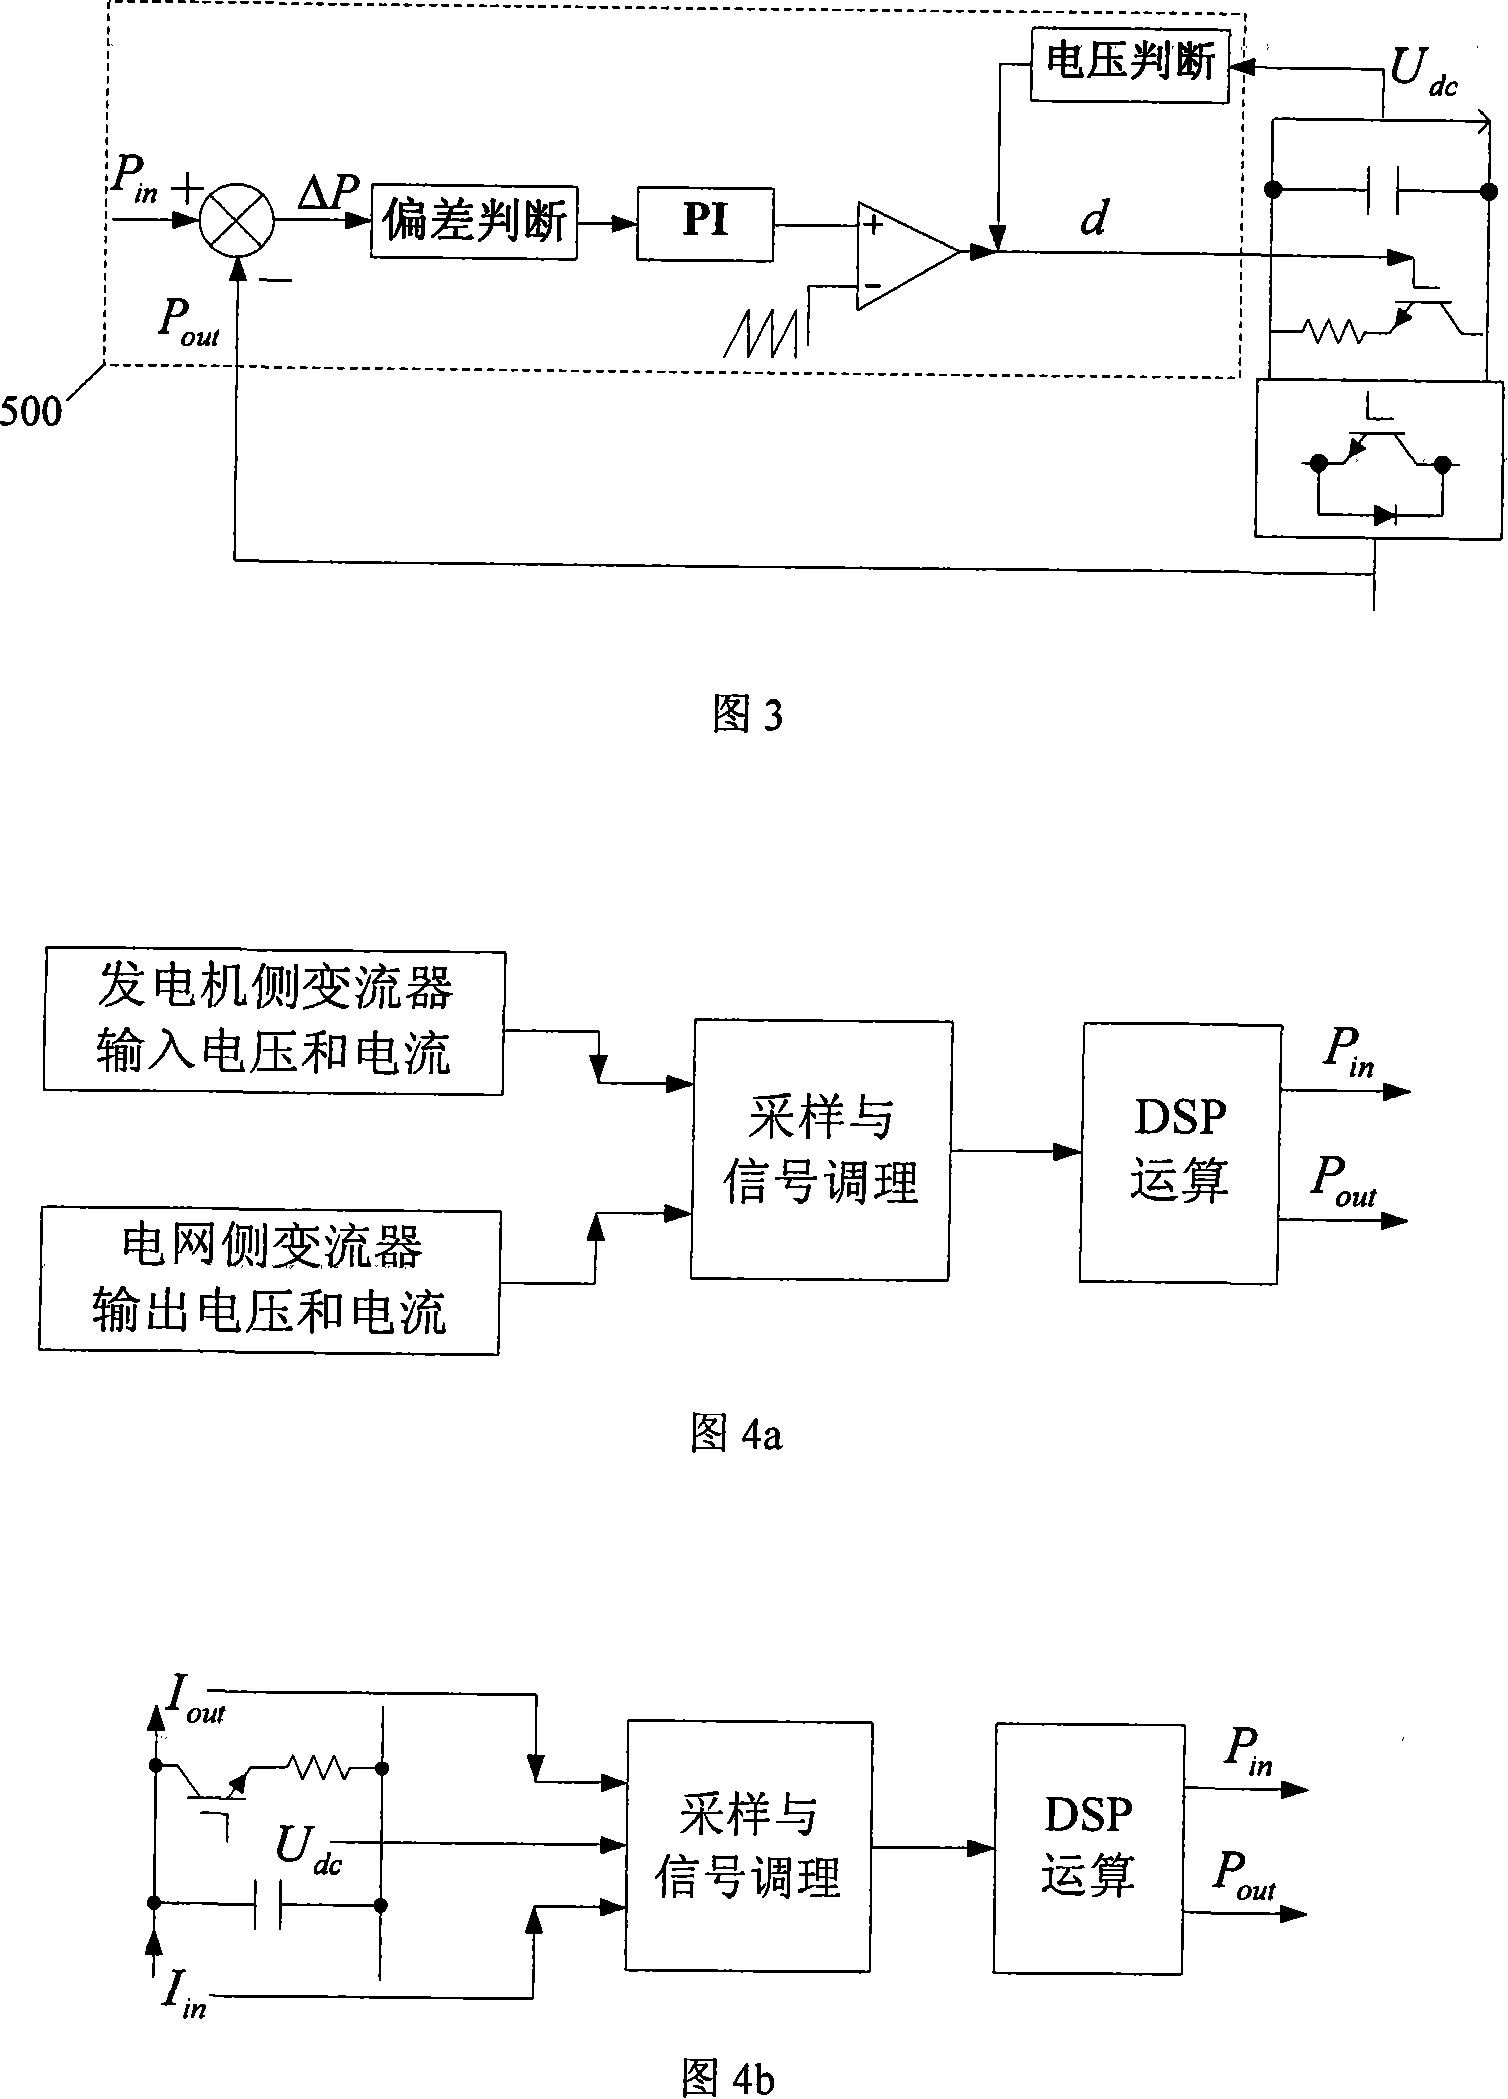 Control method of DC side-discharging circuit of full power convertor